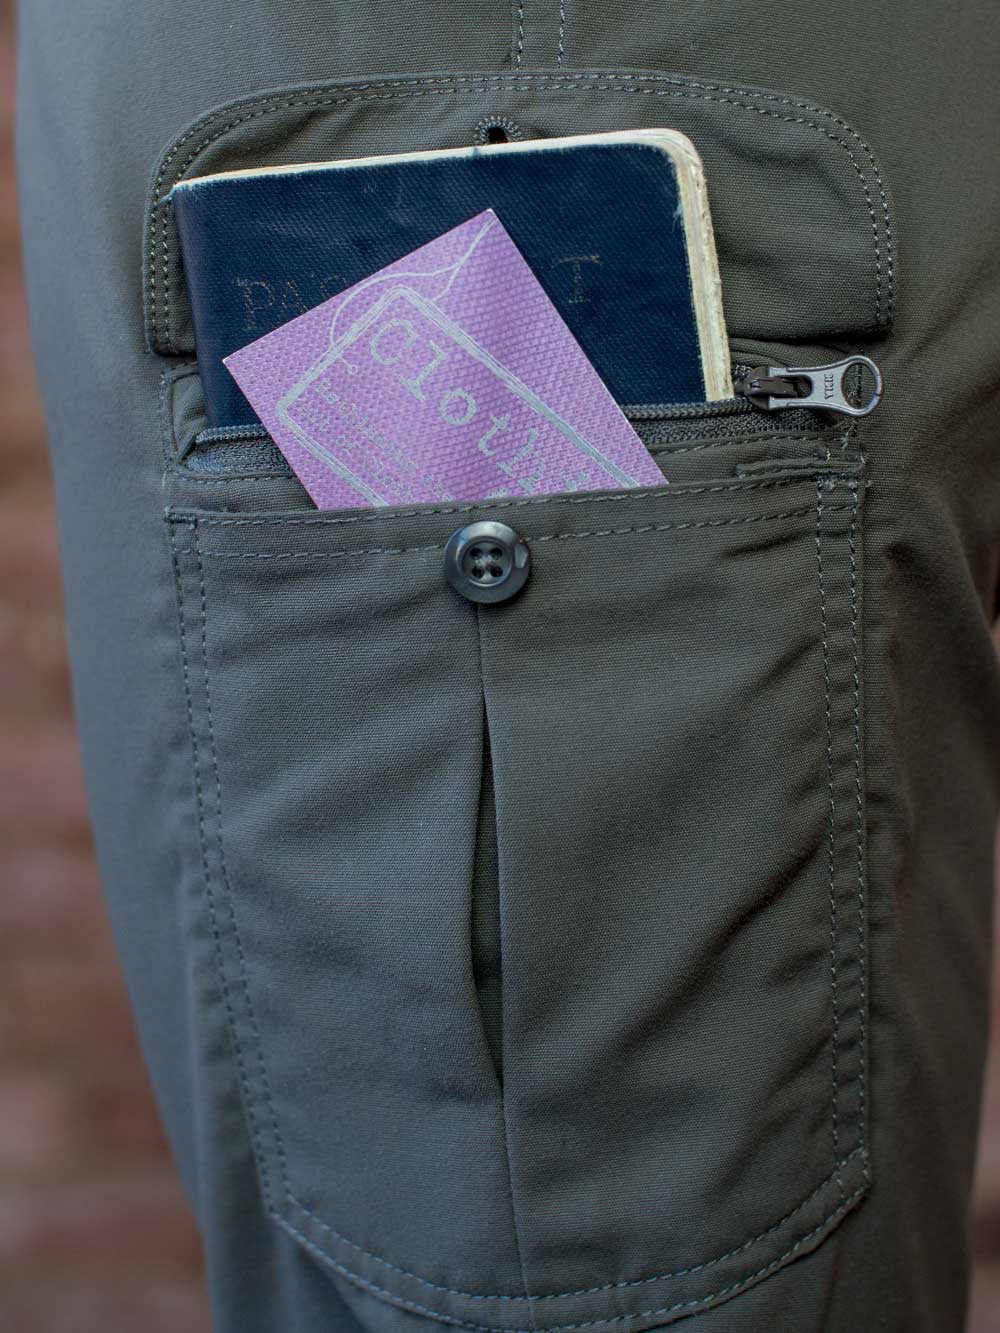 pickpocket proof pants